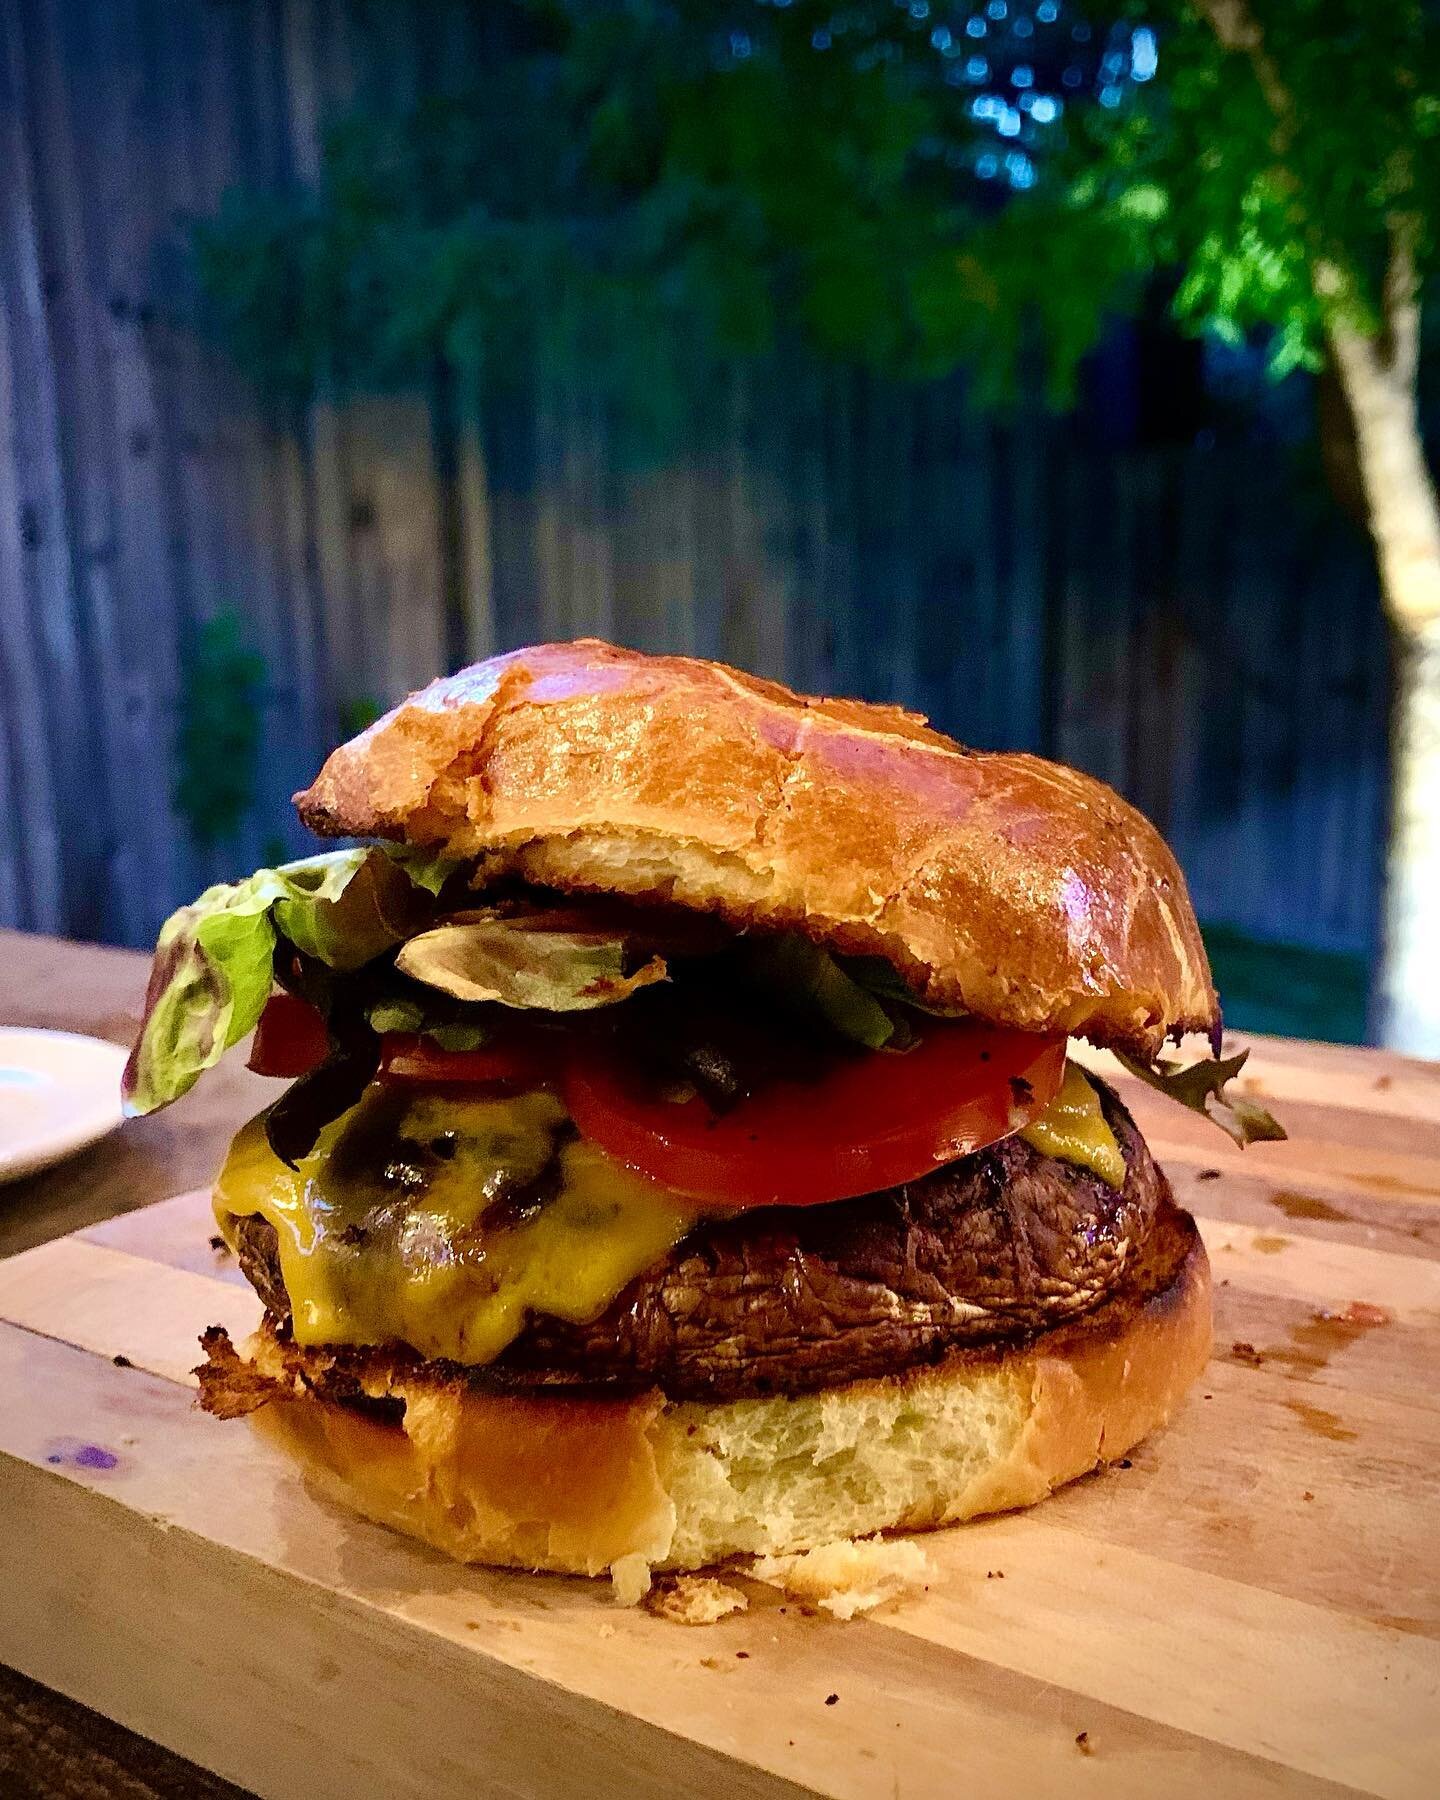 🍔🍄
Thursday night backyard burger, portobello addition. Our recipe could use a little tweaking, but we were just elated to eat outdoors. 

#eatsimple #vegetarian #mushroomburger #thursdaydinner